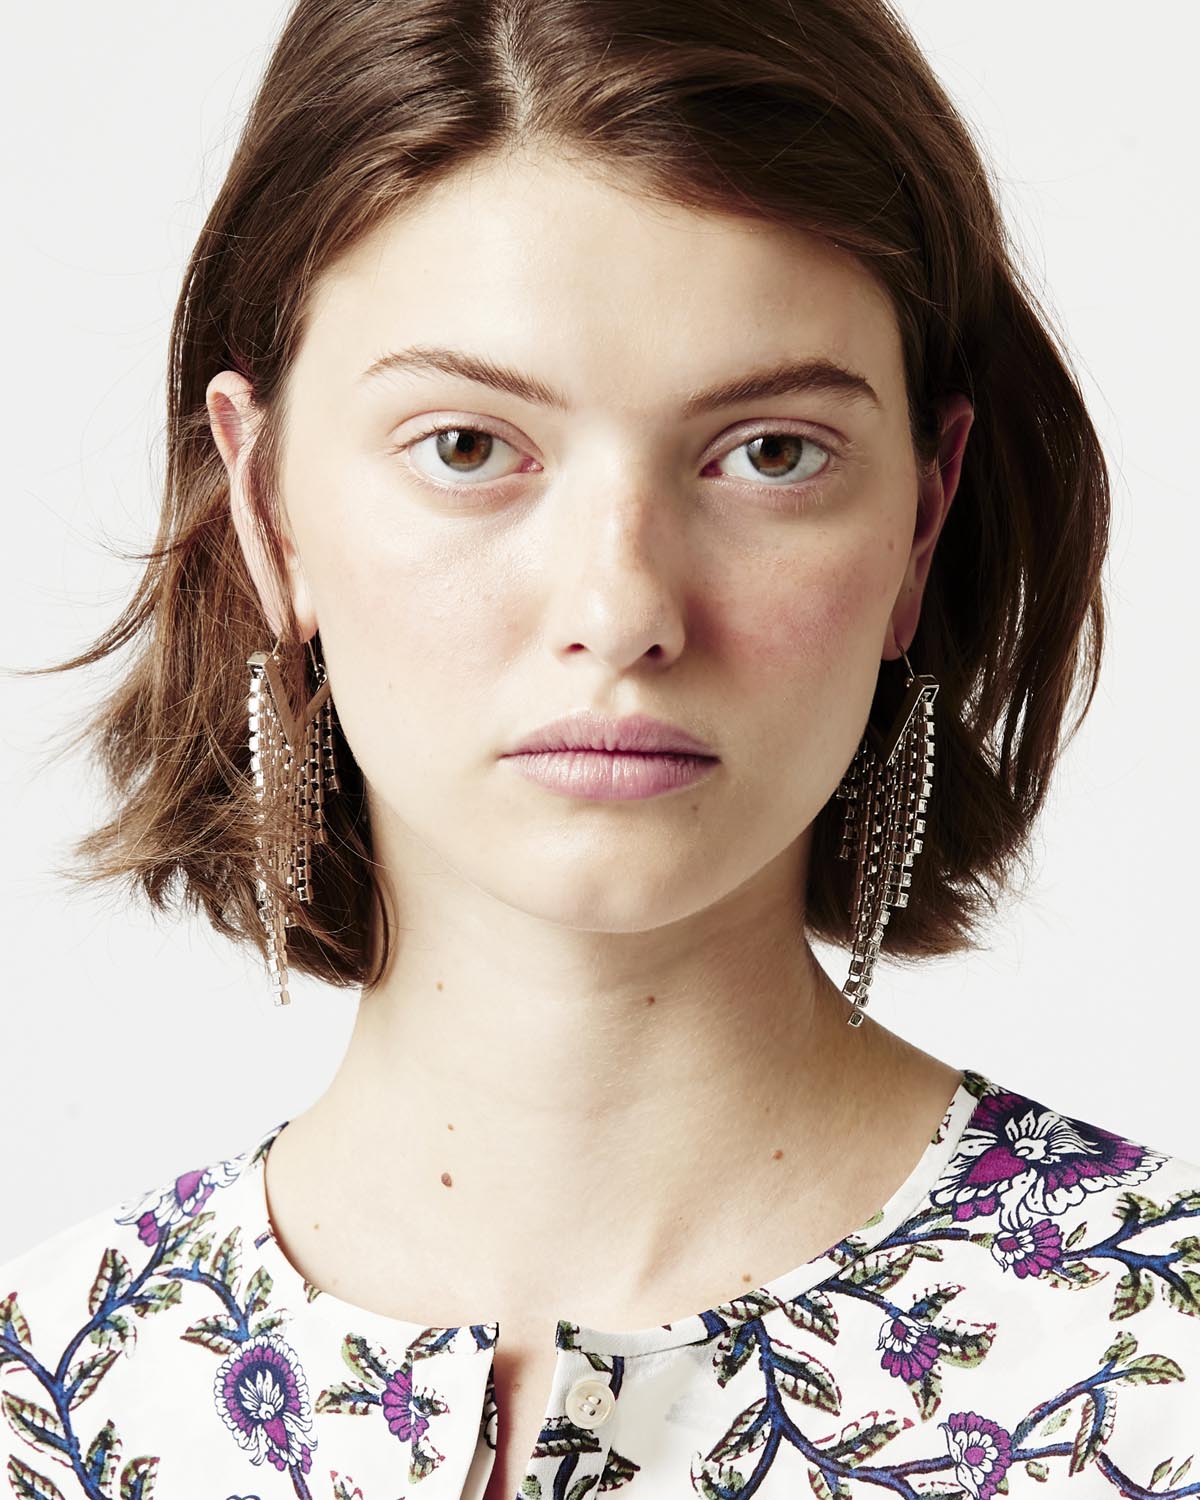 Melting earrings Woman Transparent 1